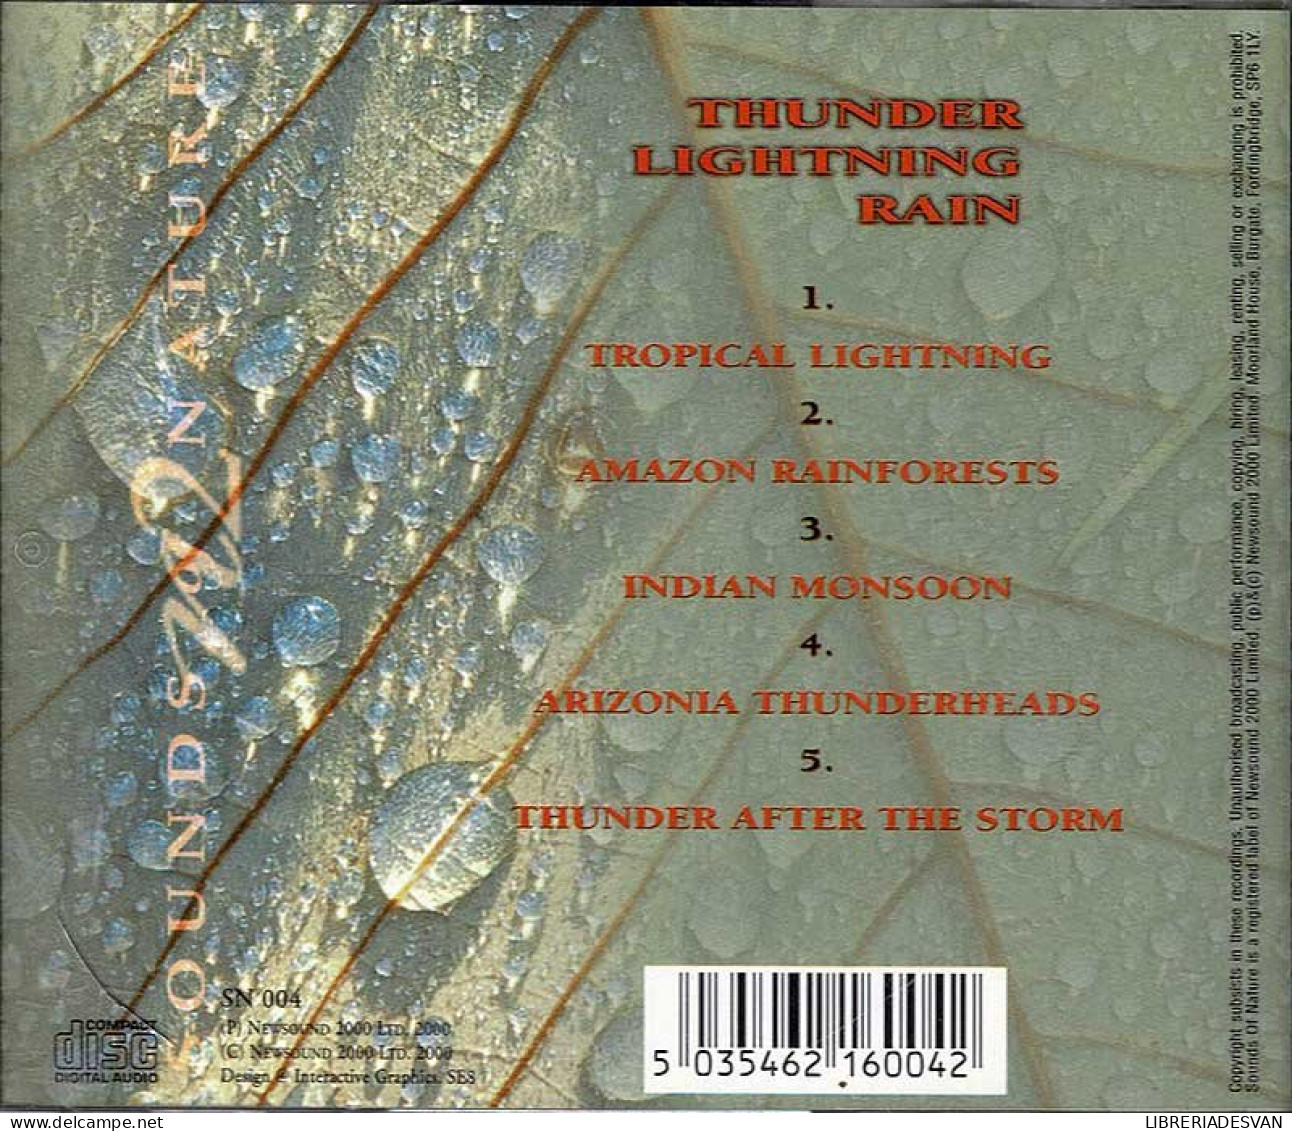 Paul Rayner-Brown - Thunder Lightning Rain. CD - Nueva Era (New Age)